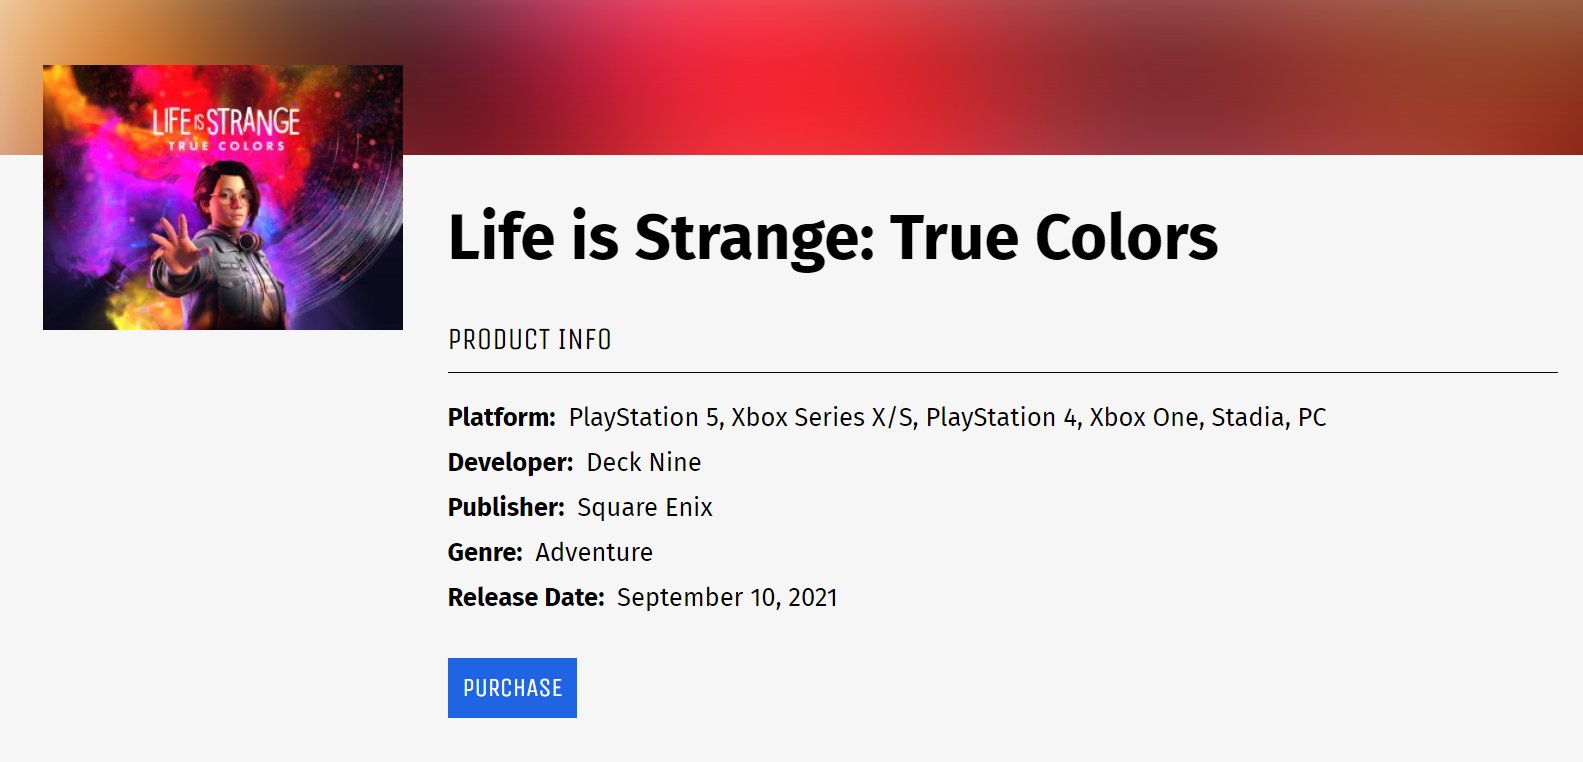 Life is Strange: True Colors Revealed via Leak